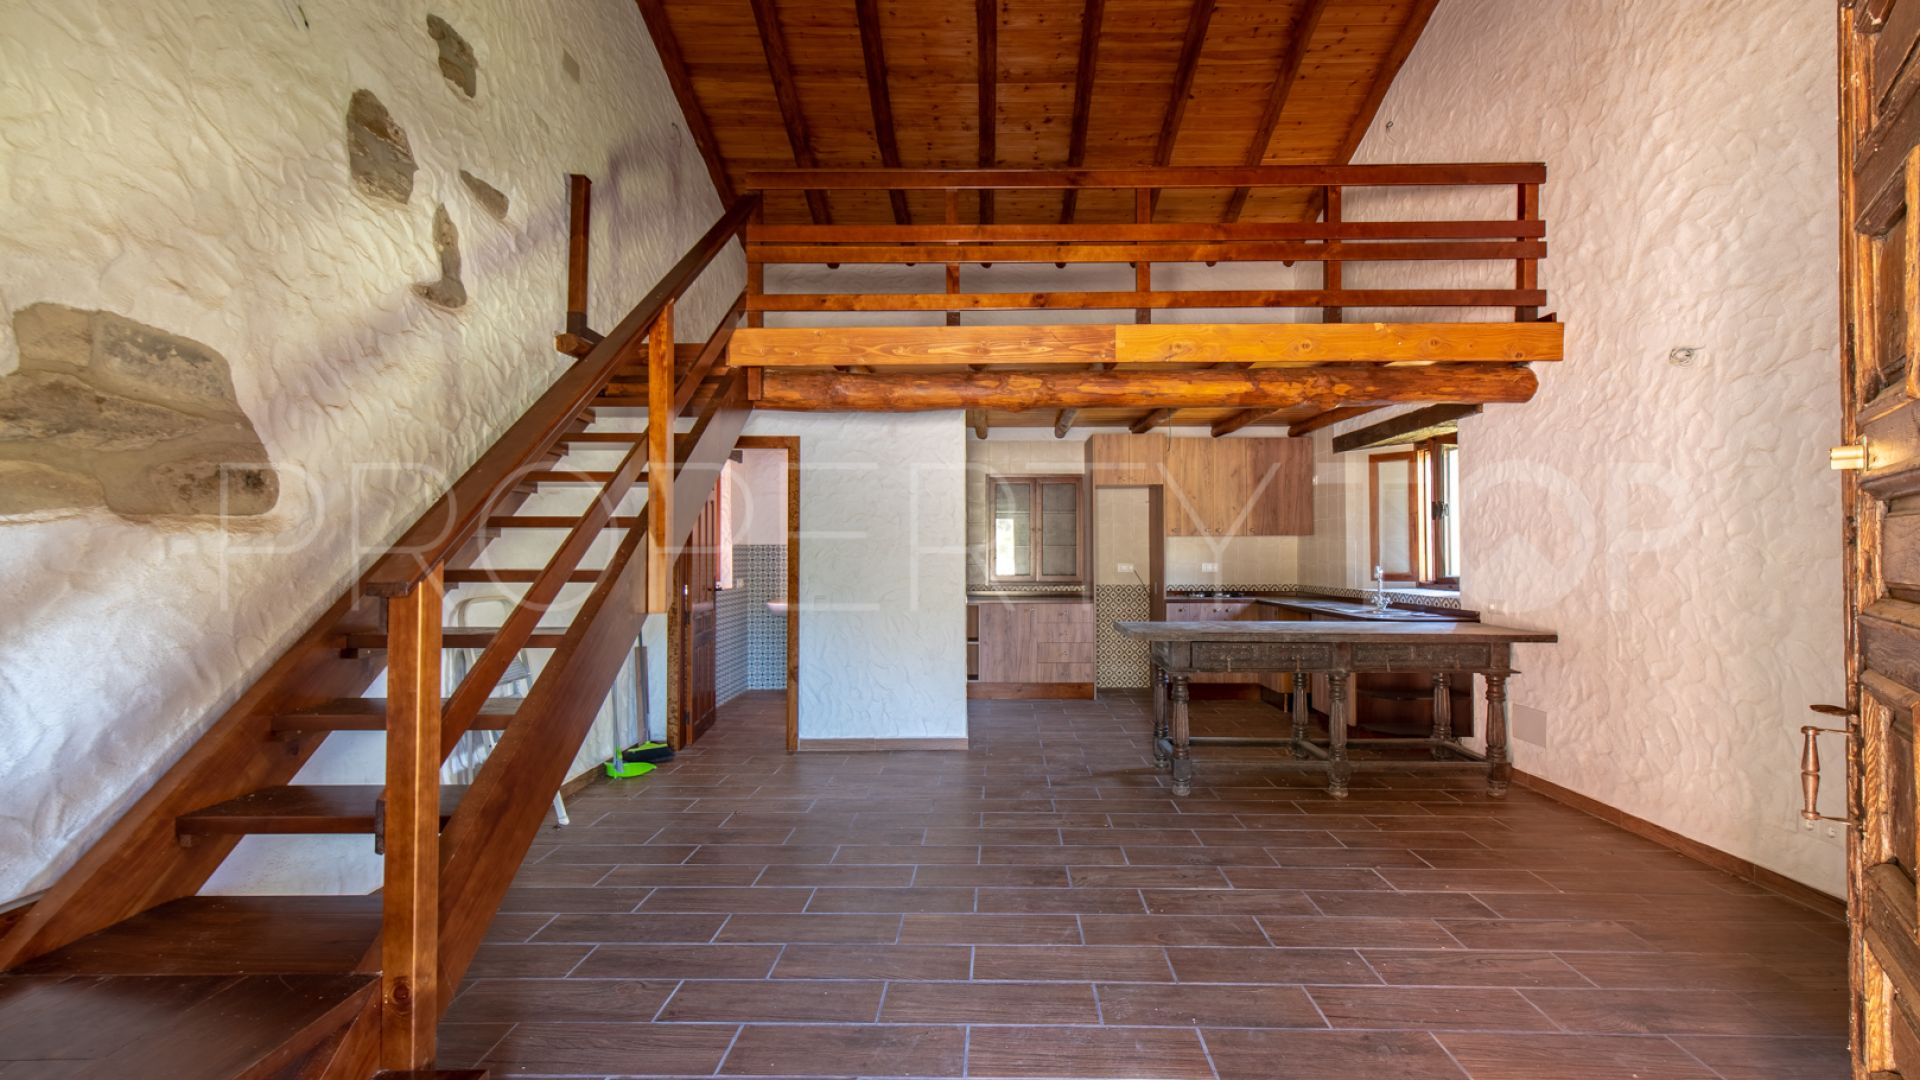 Buy estate with 3 bedrooms in Casares